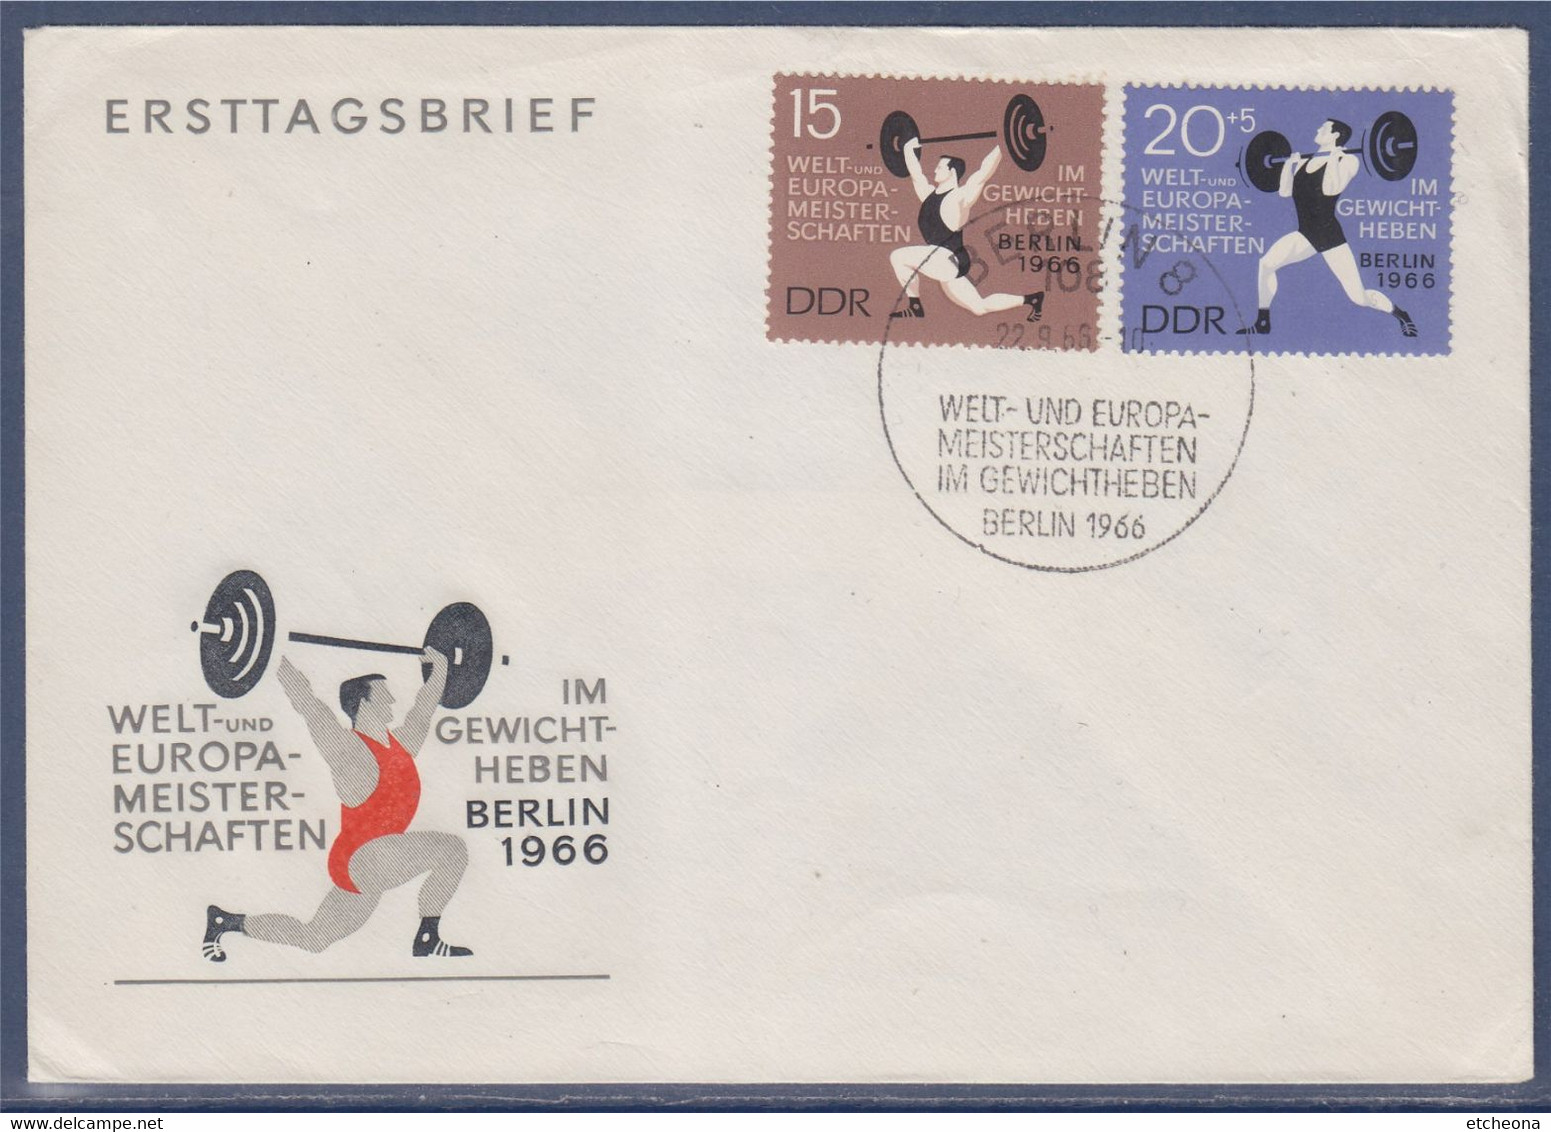 Championnats Du Monde Et D'Europe D'haltérophilie Berlin 1966 Enveloppe 2 Timbres Allemagne - Weightlifting